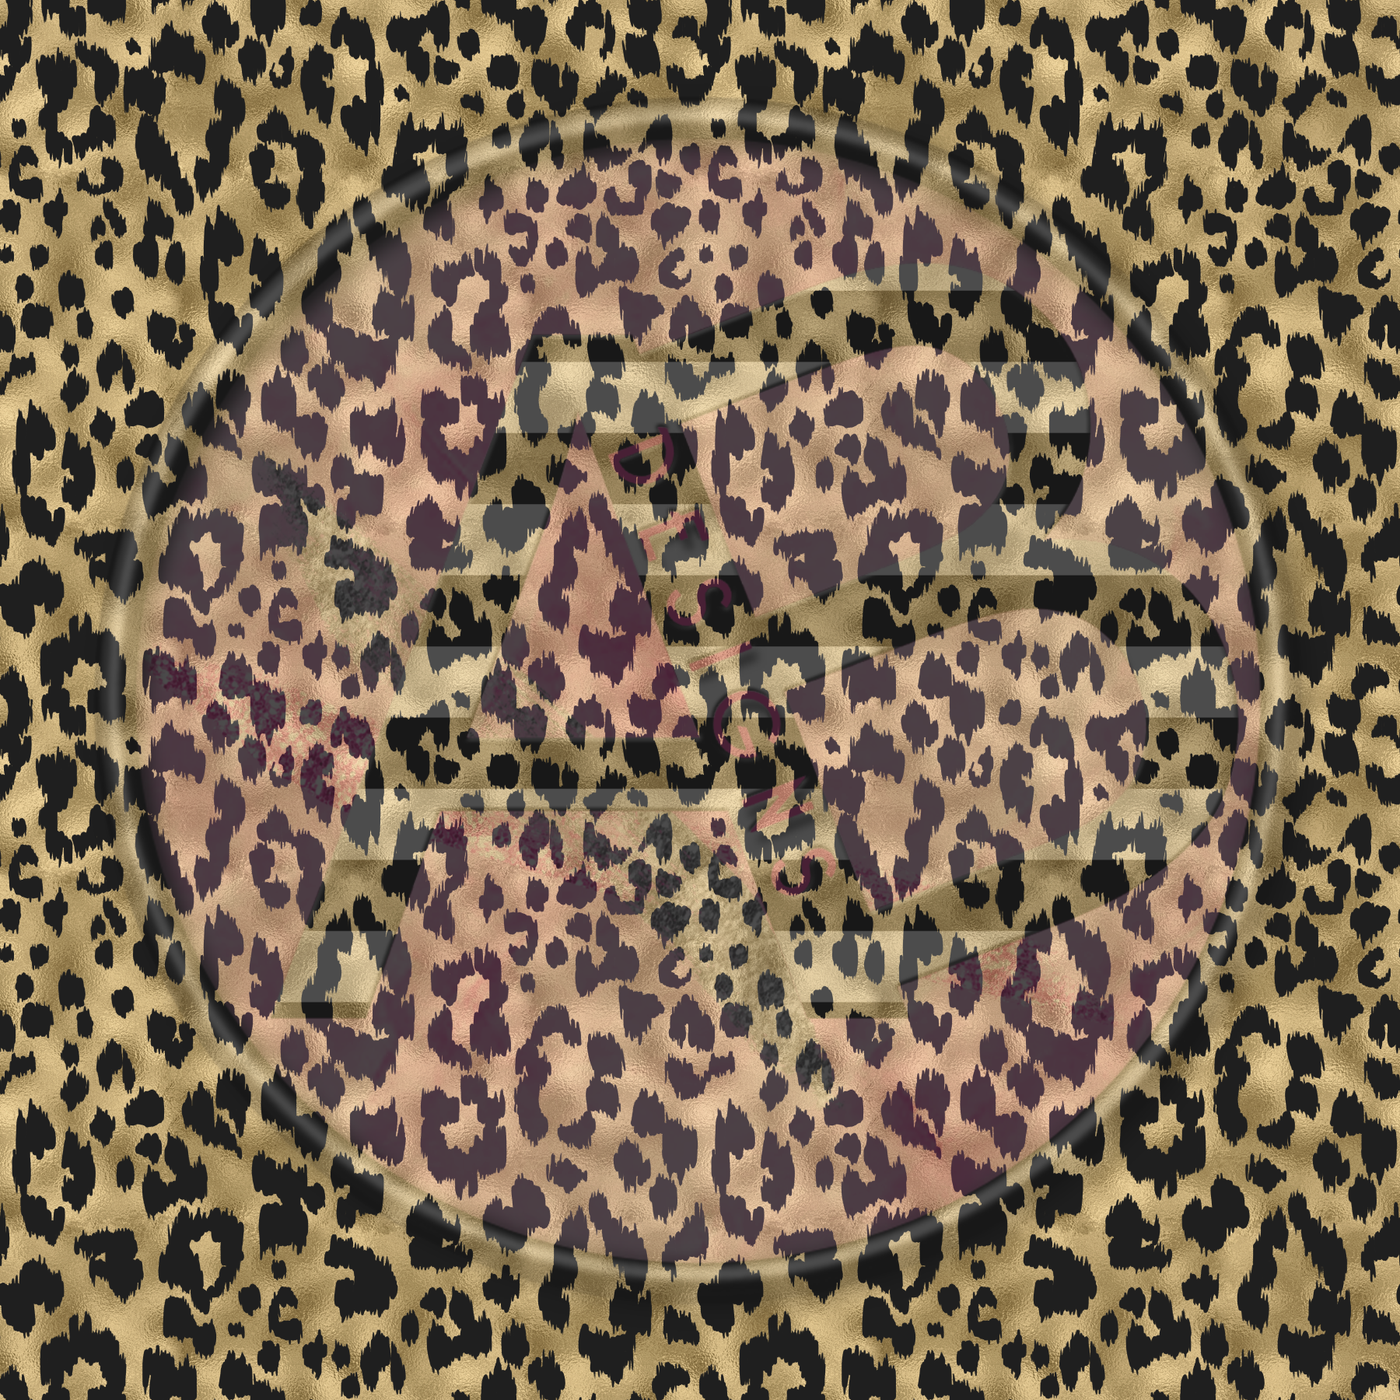 Adhesive Patterned Vinyl - Cheetah 207 Smaller